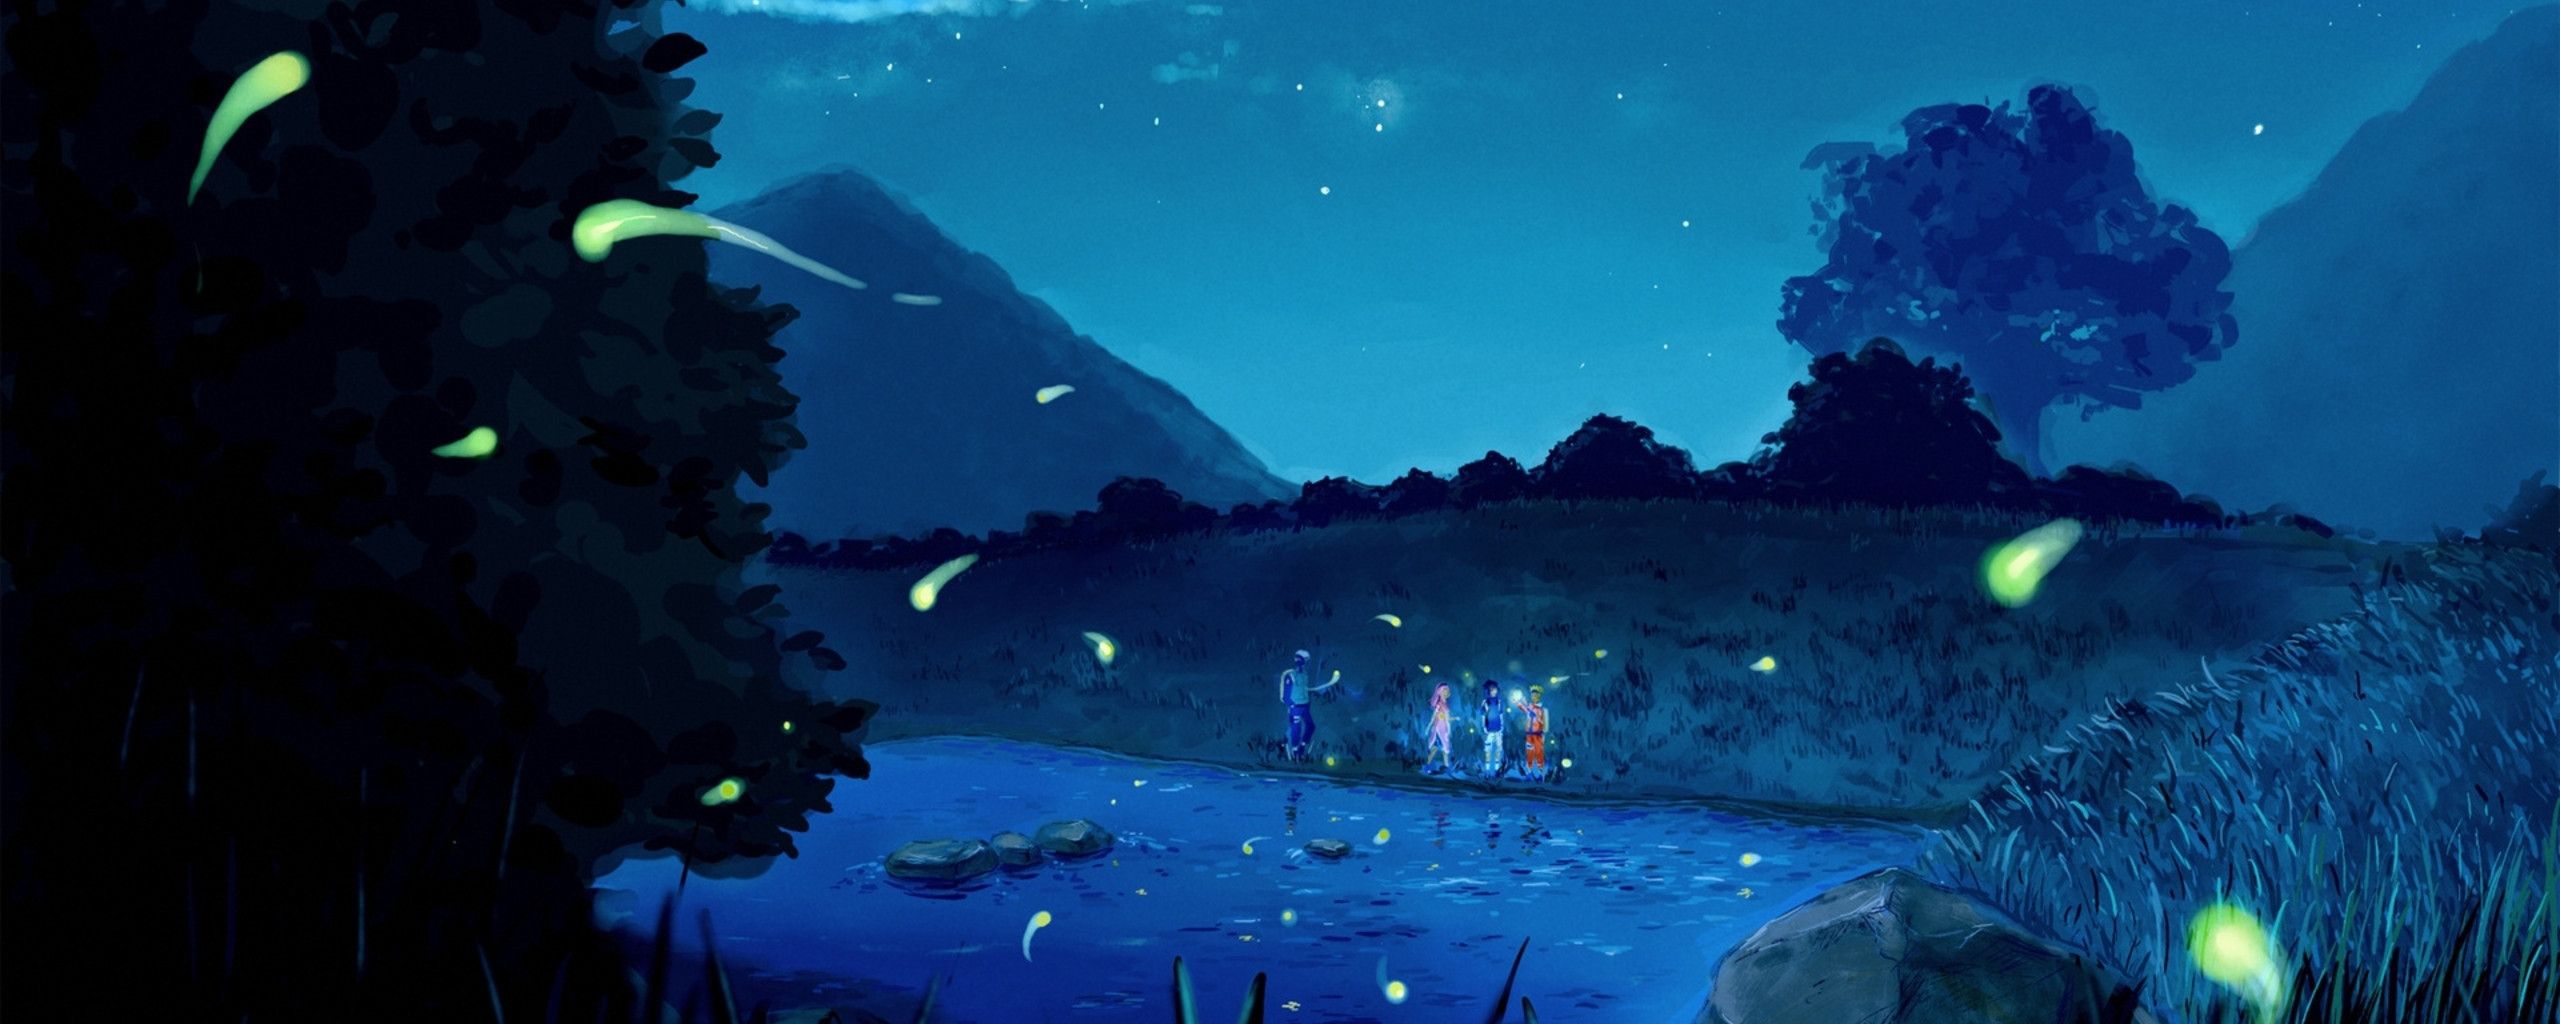 A painting of people walking by water with fireflies - Naruto, Kakashi Hatake, Sasuke Uchiha